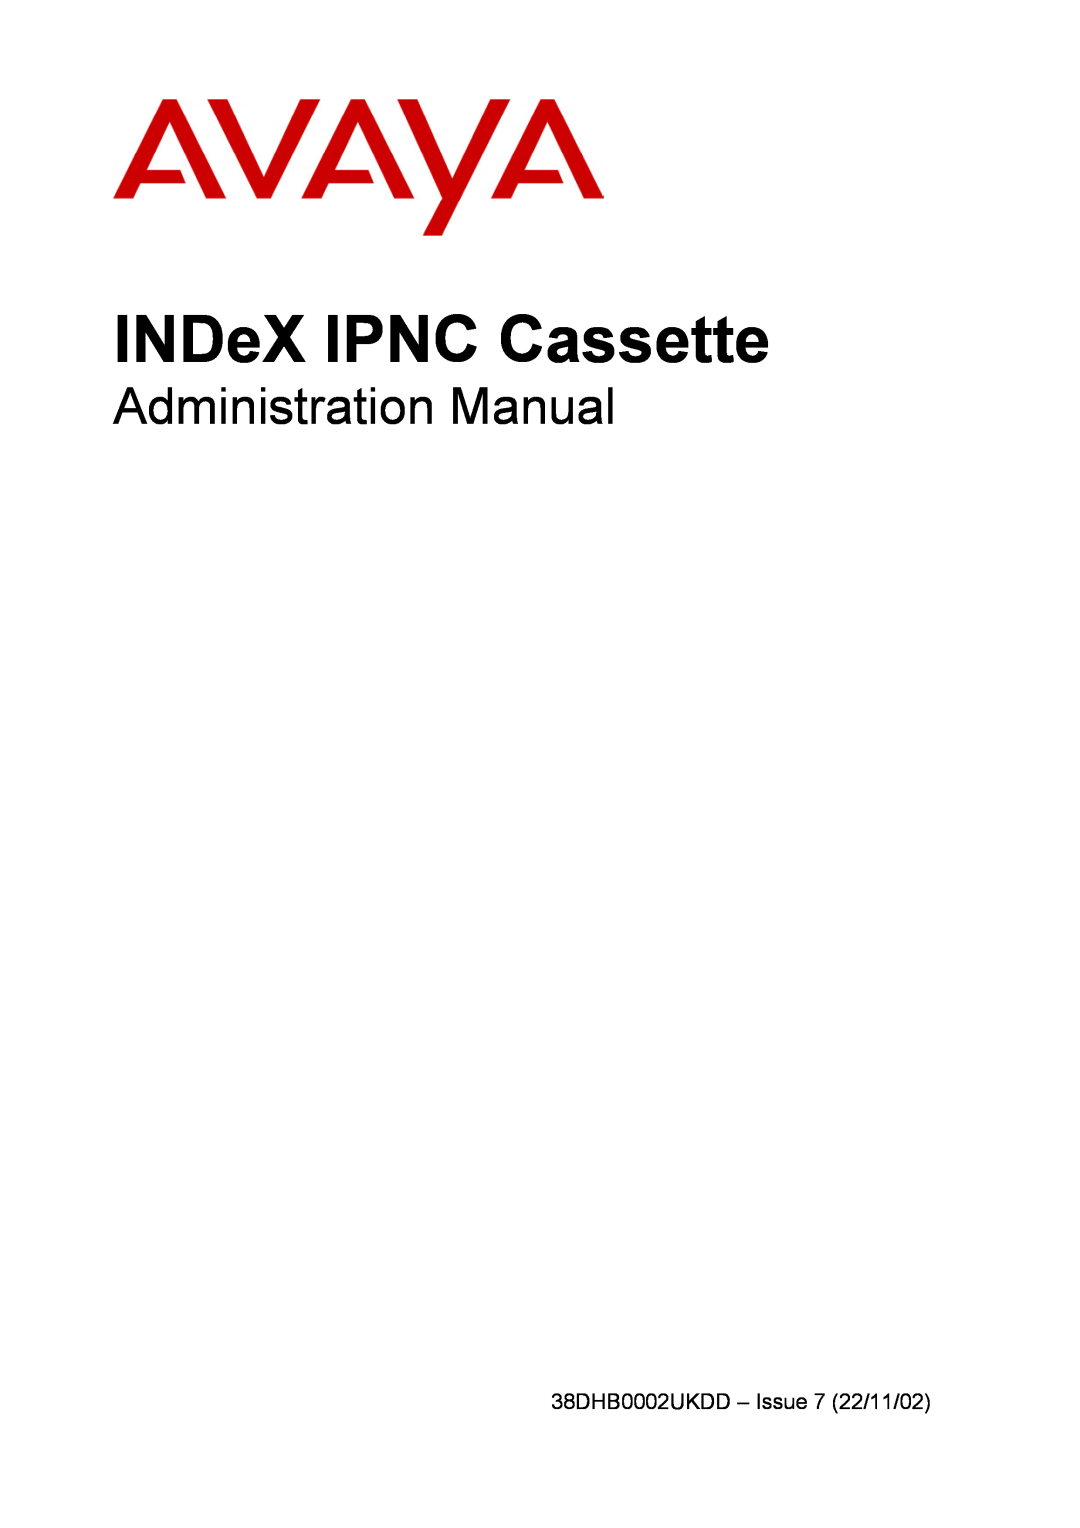 Avaya manual INDeX IPNC Cassette, Administration Manual, 38DHB0002UKDD – Issue 7 22/11/02 